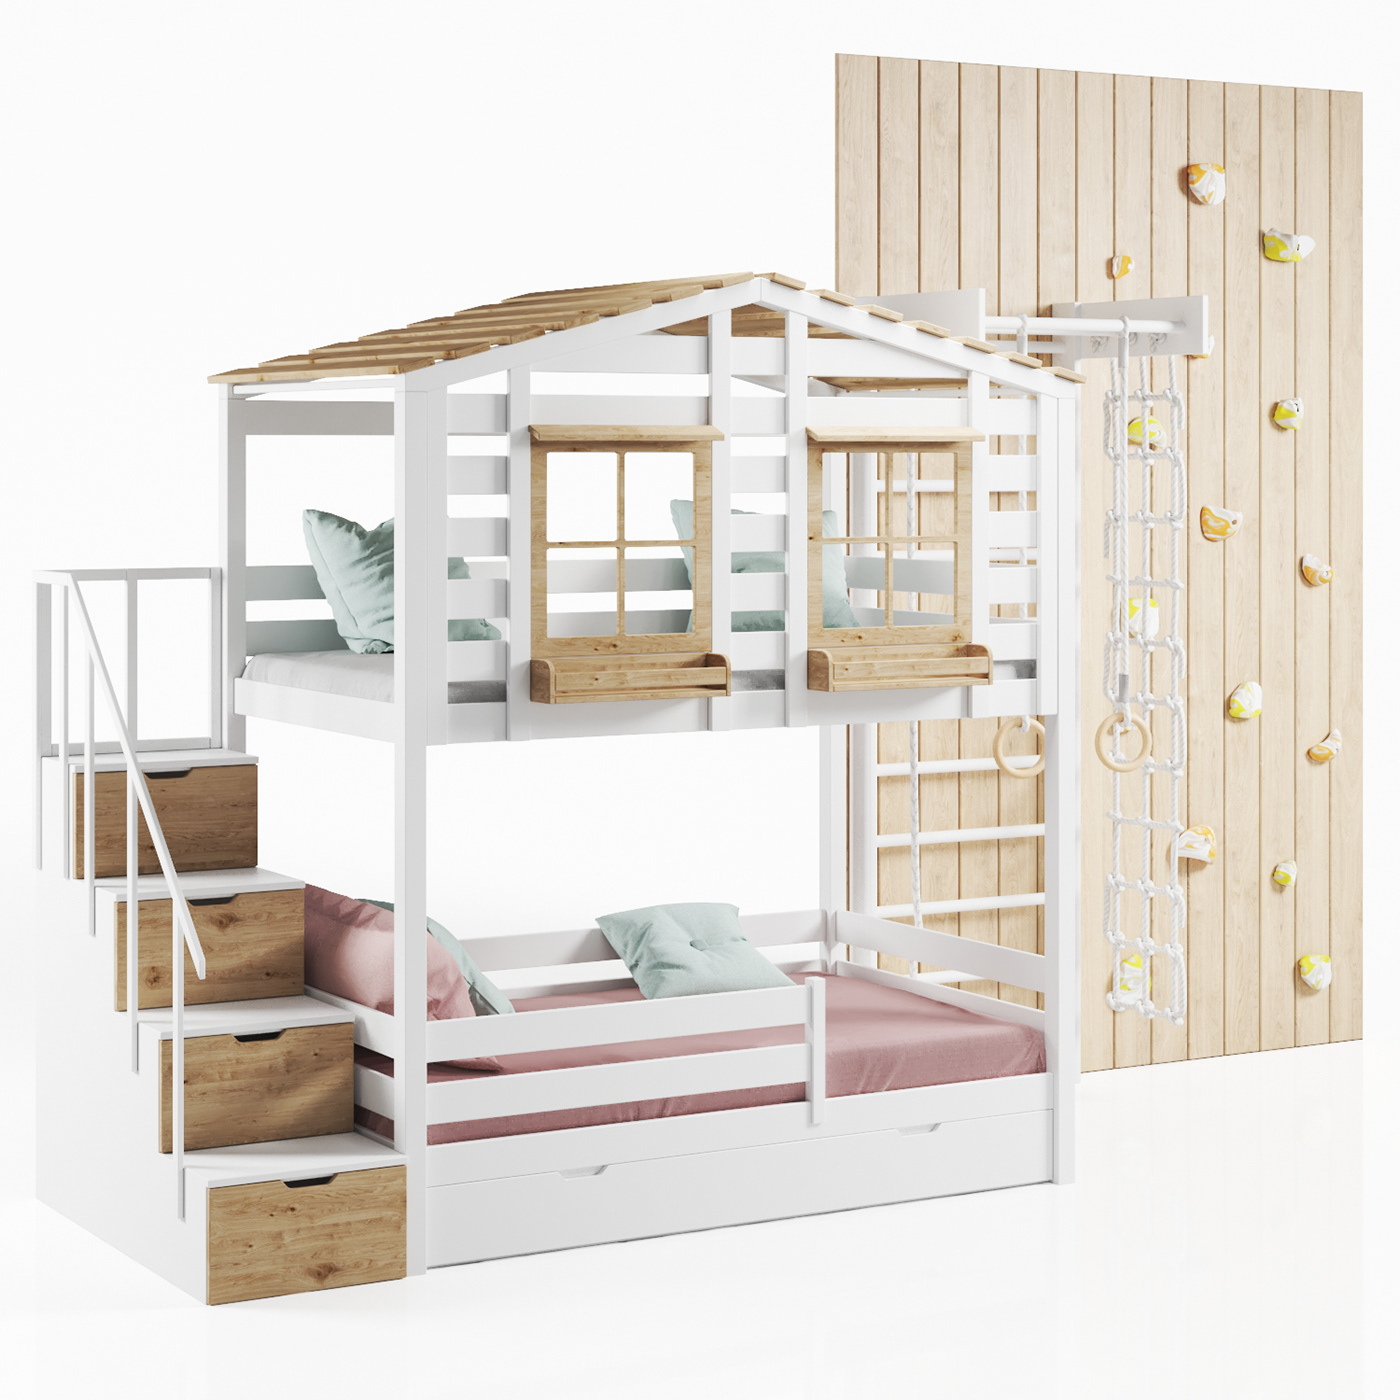 2 level 3D bed bilbao children Hooks model Sweden wall download